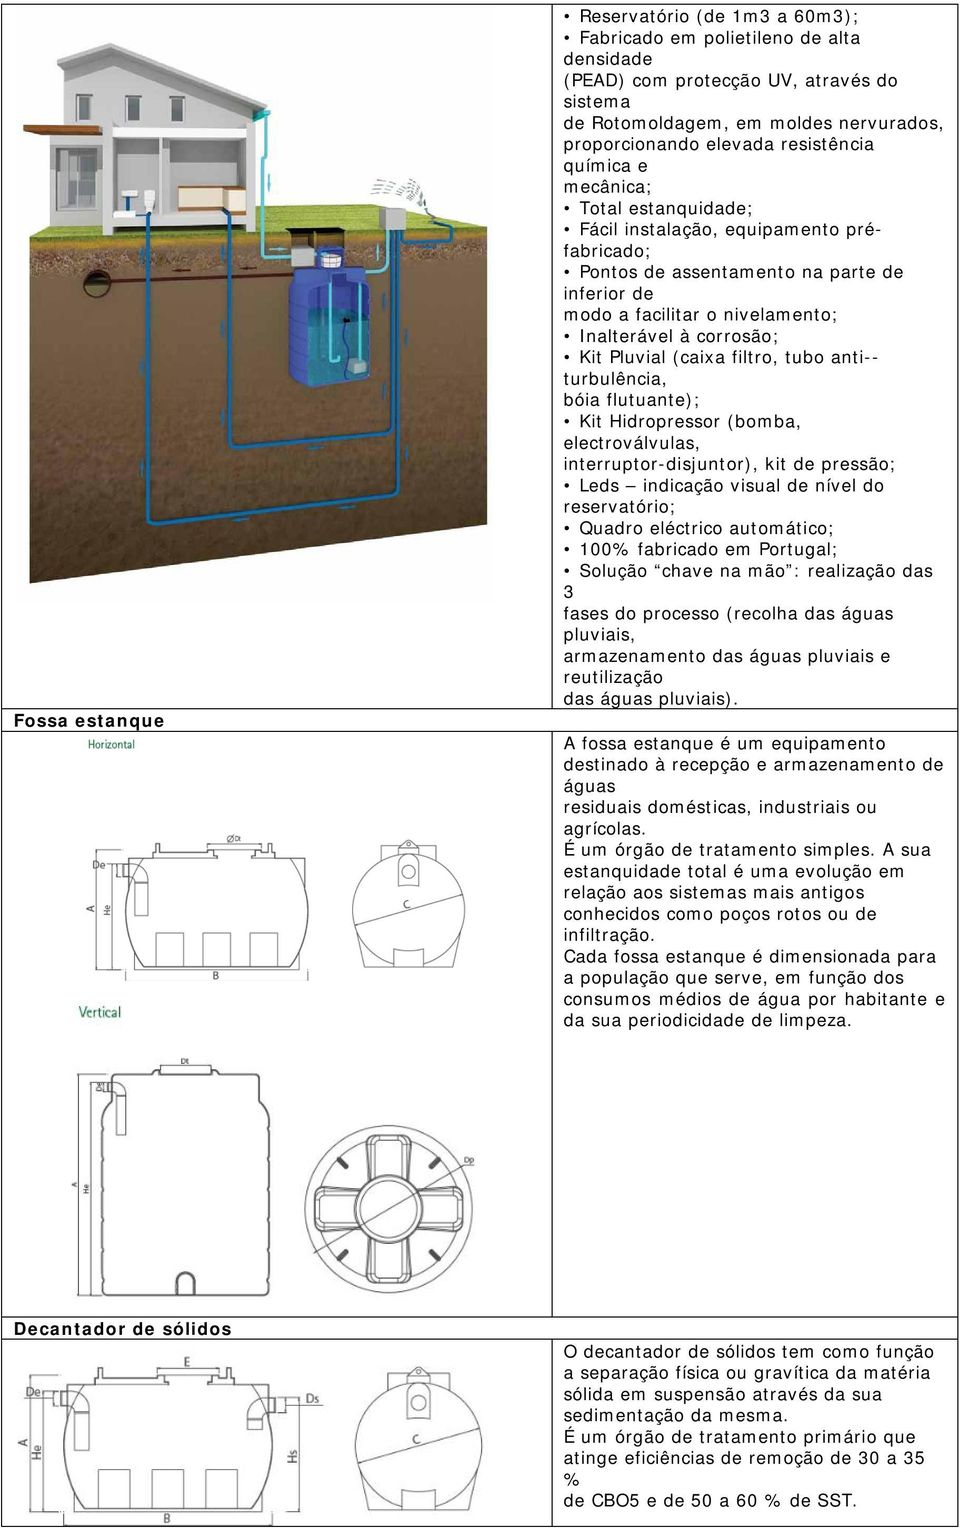 Kit Pluvial (caixa filtro, tubo anti-- turbulência, bóia flutuante); Kit Hidropressor (bomba, electroválvulas, interruptor-disjuntor), kit de pressão; Leds indicação visual de nível do reservatório;